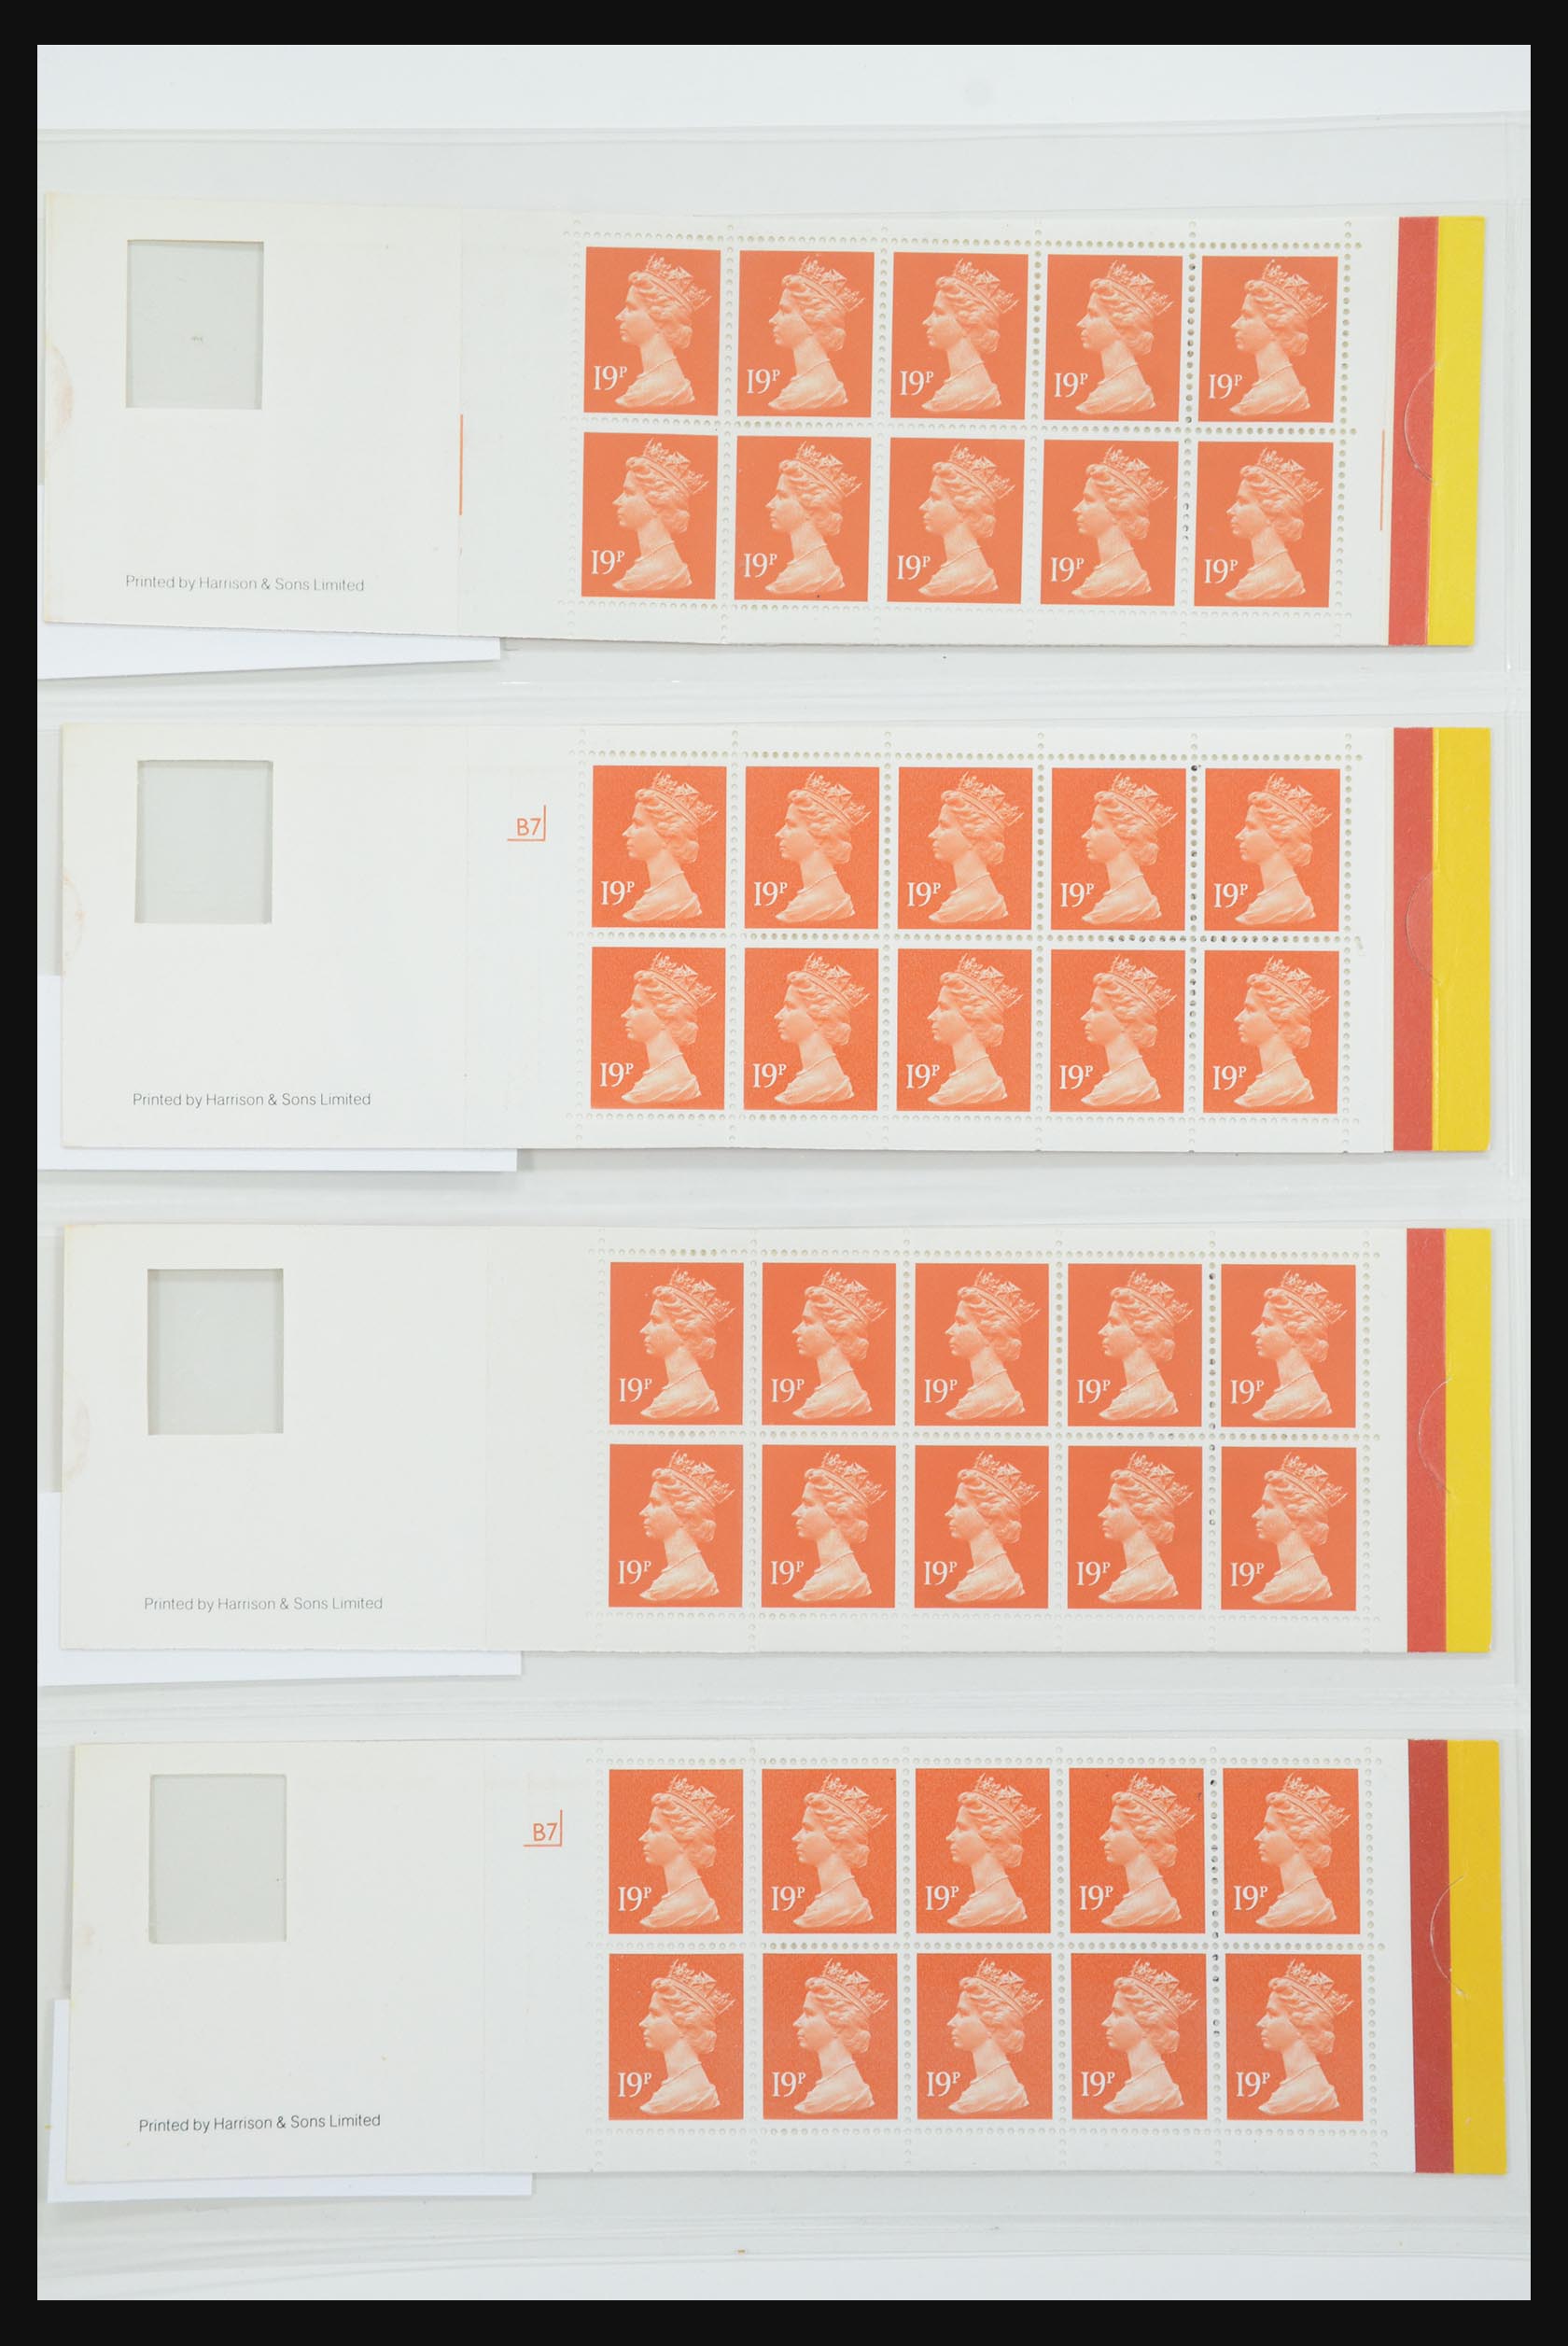 31959 070 - 31959 Great Britain stampbooklets 1987-2016!!